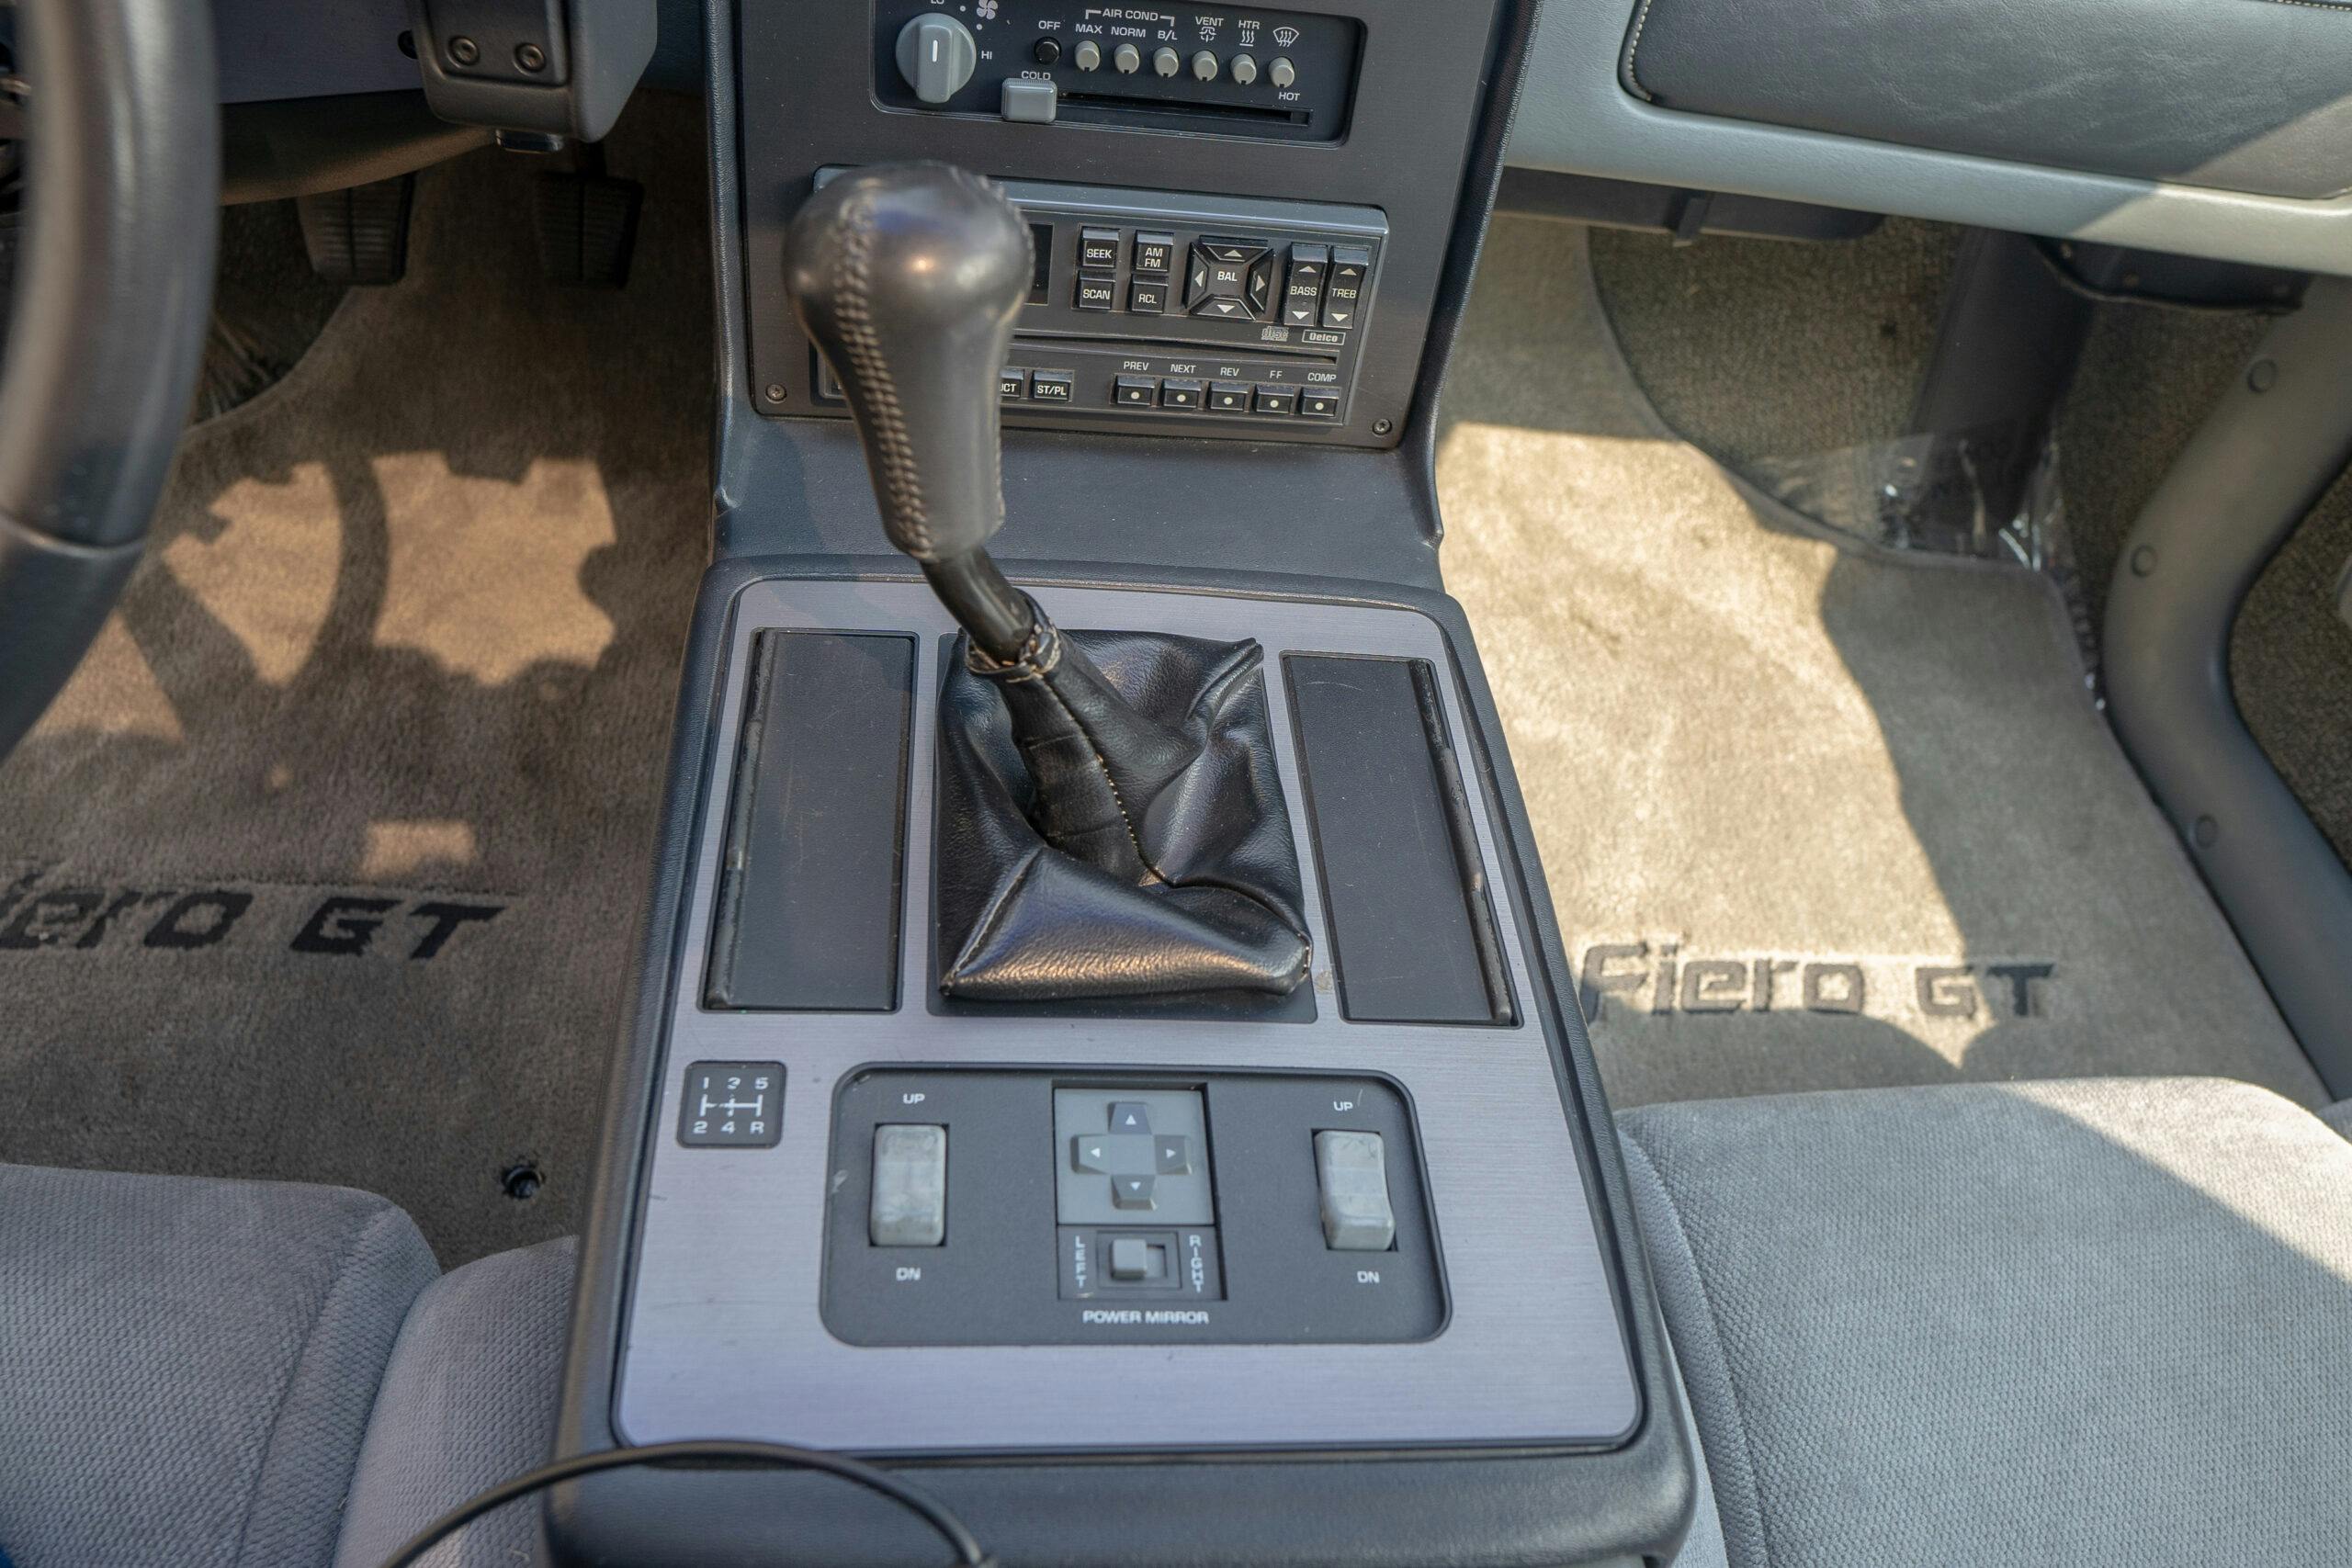 1986 Pontiac Fiero GT interior shifter